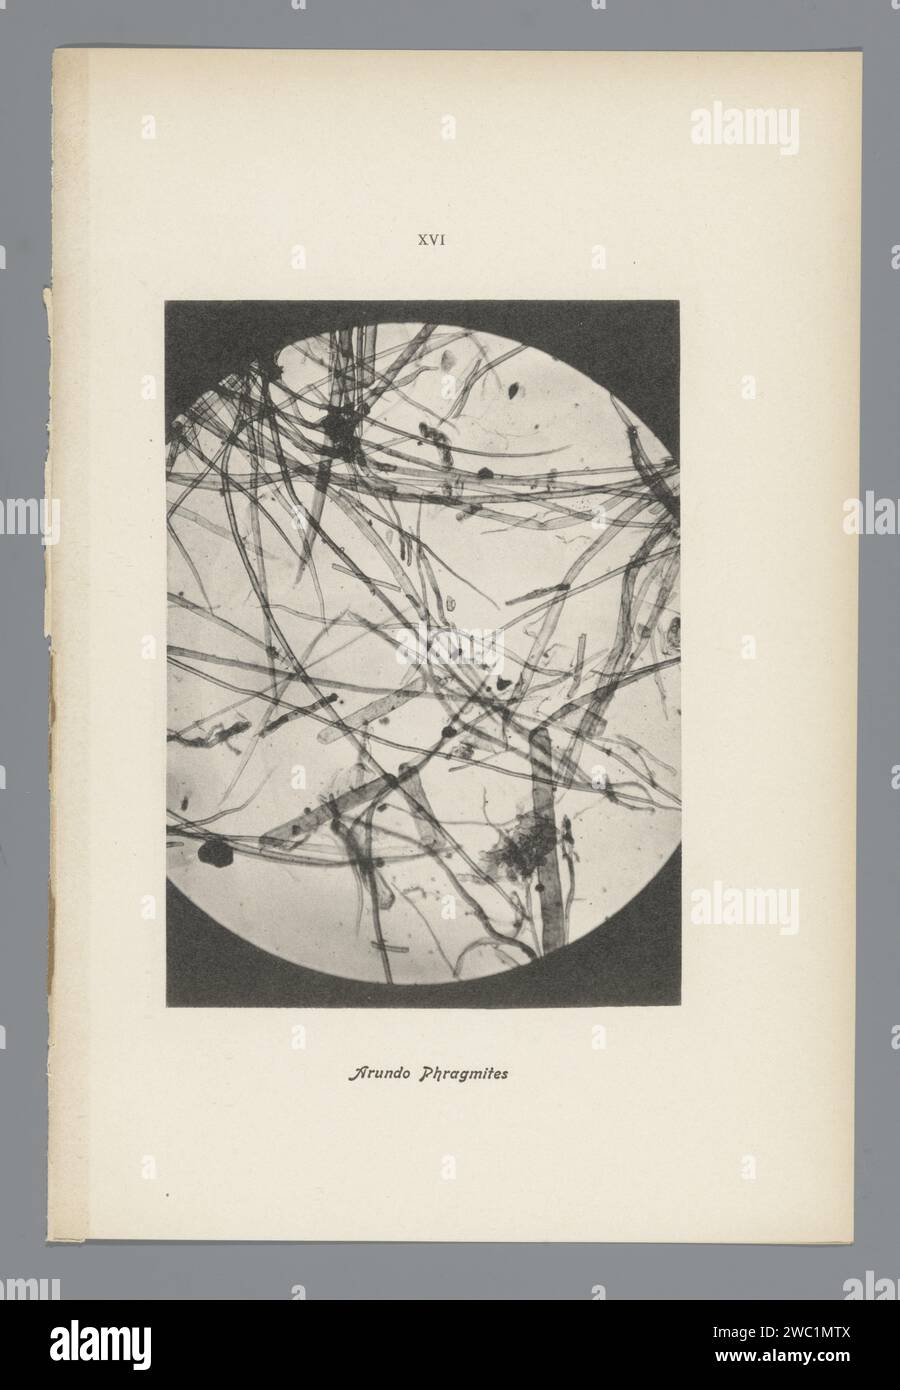 XVI Arundo Phragmites, anonym, 1900 Fotomaterial aus Précis Historique. Frankreich Papier. Farbkollotyp Stockfoto